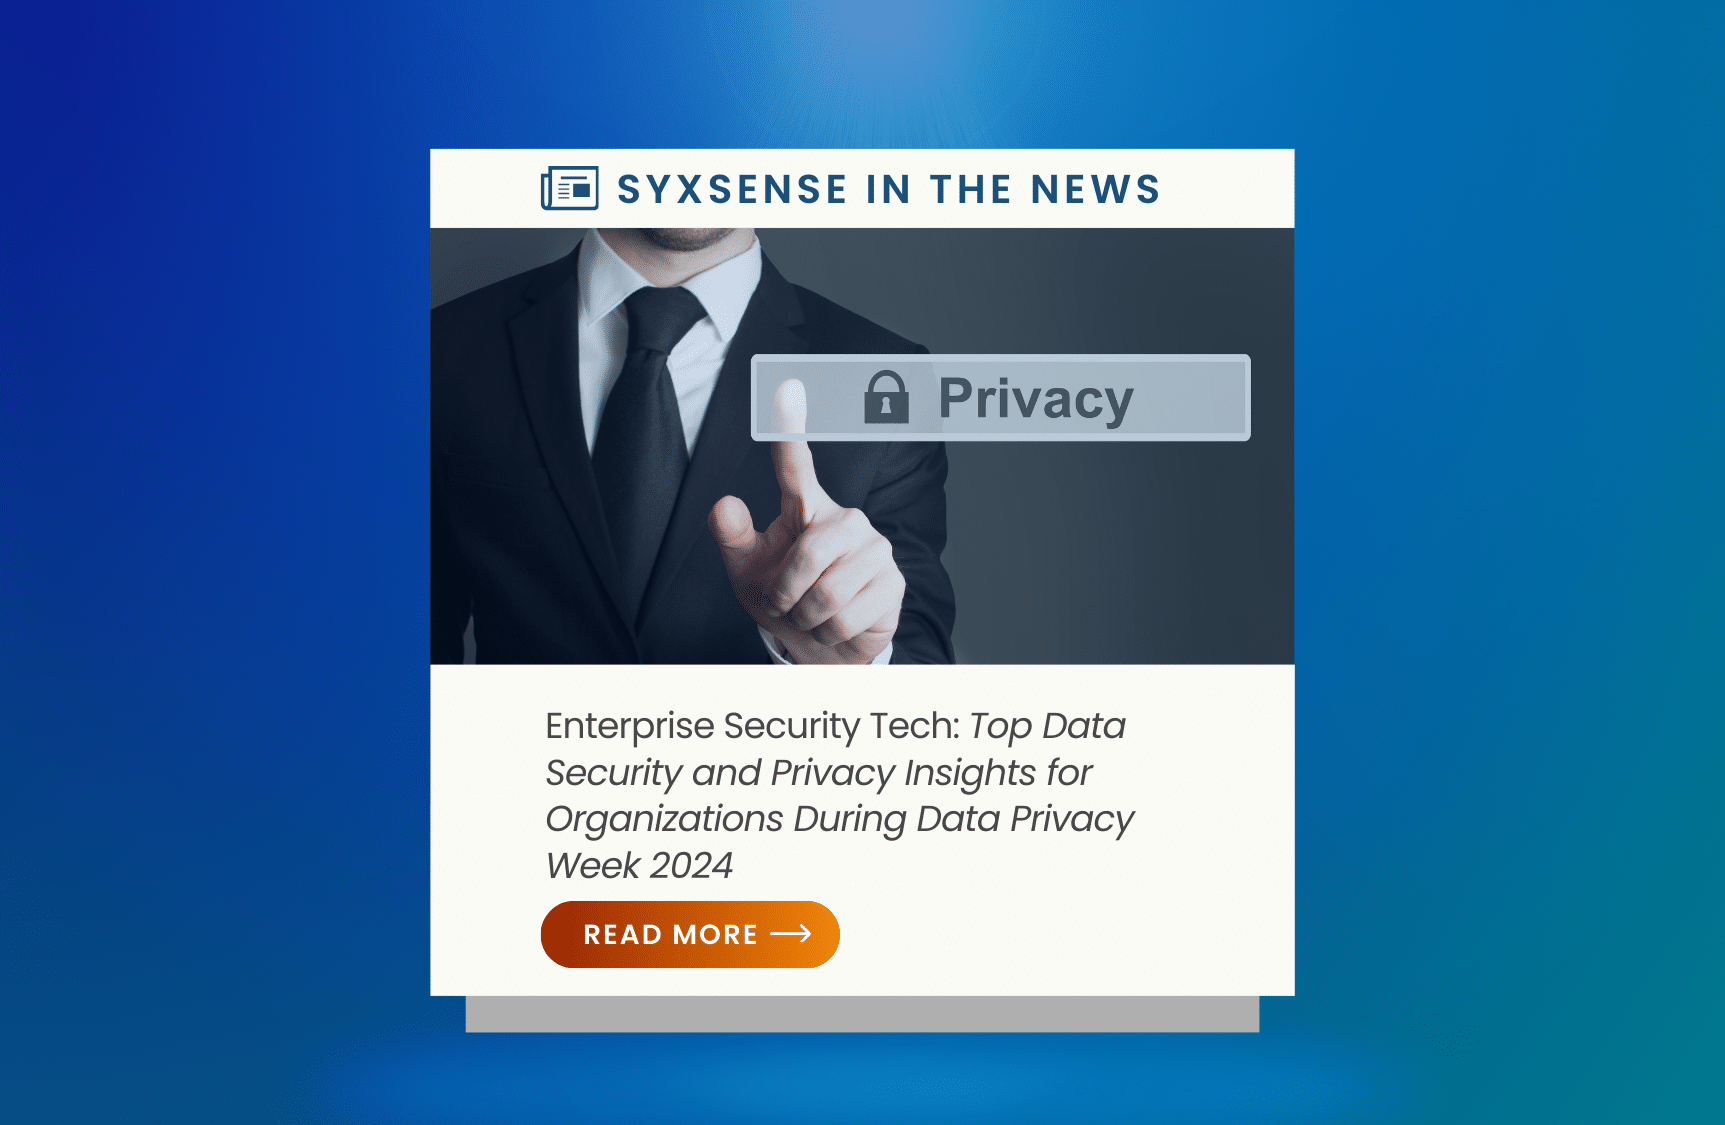 Syxsense in Enterprise Security Tech magazine.